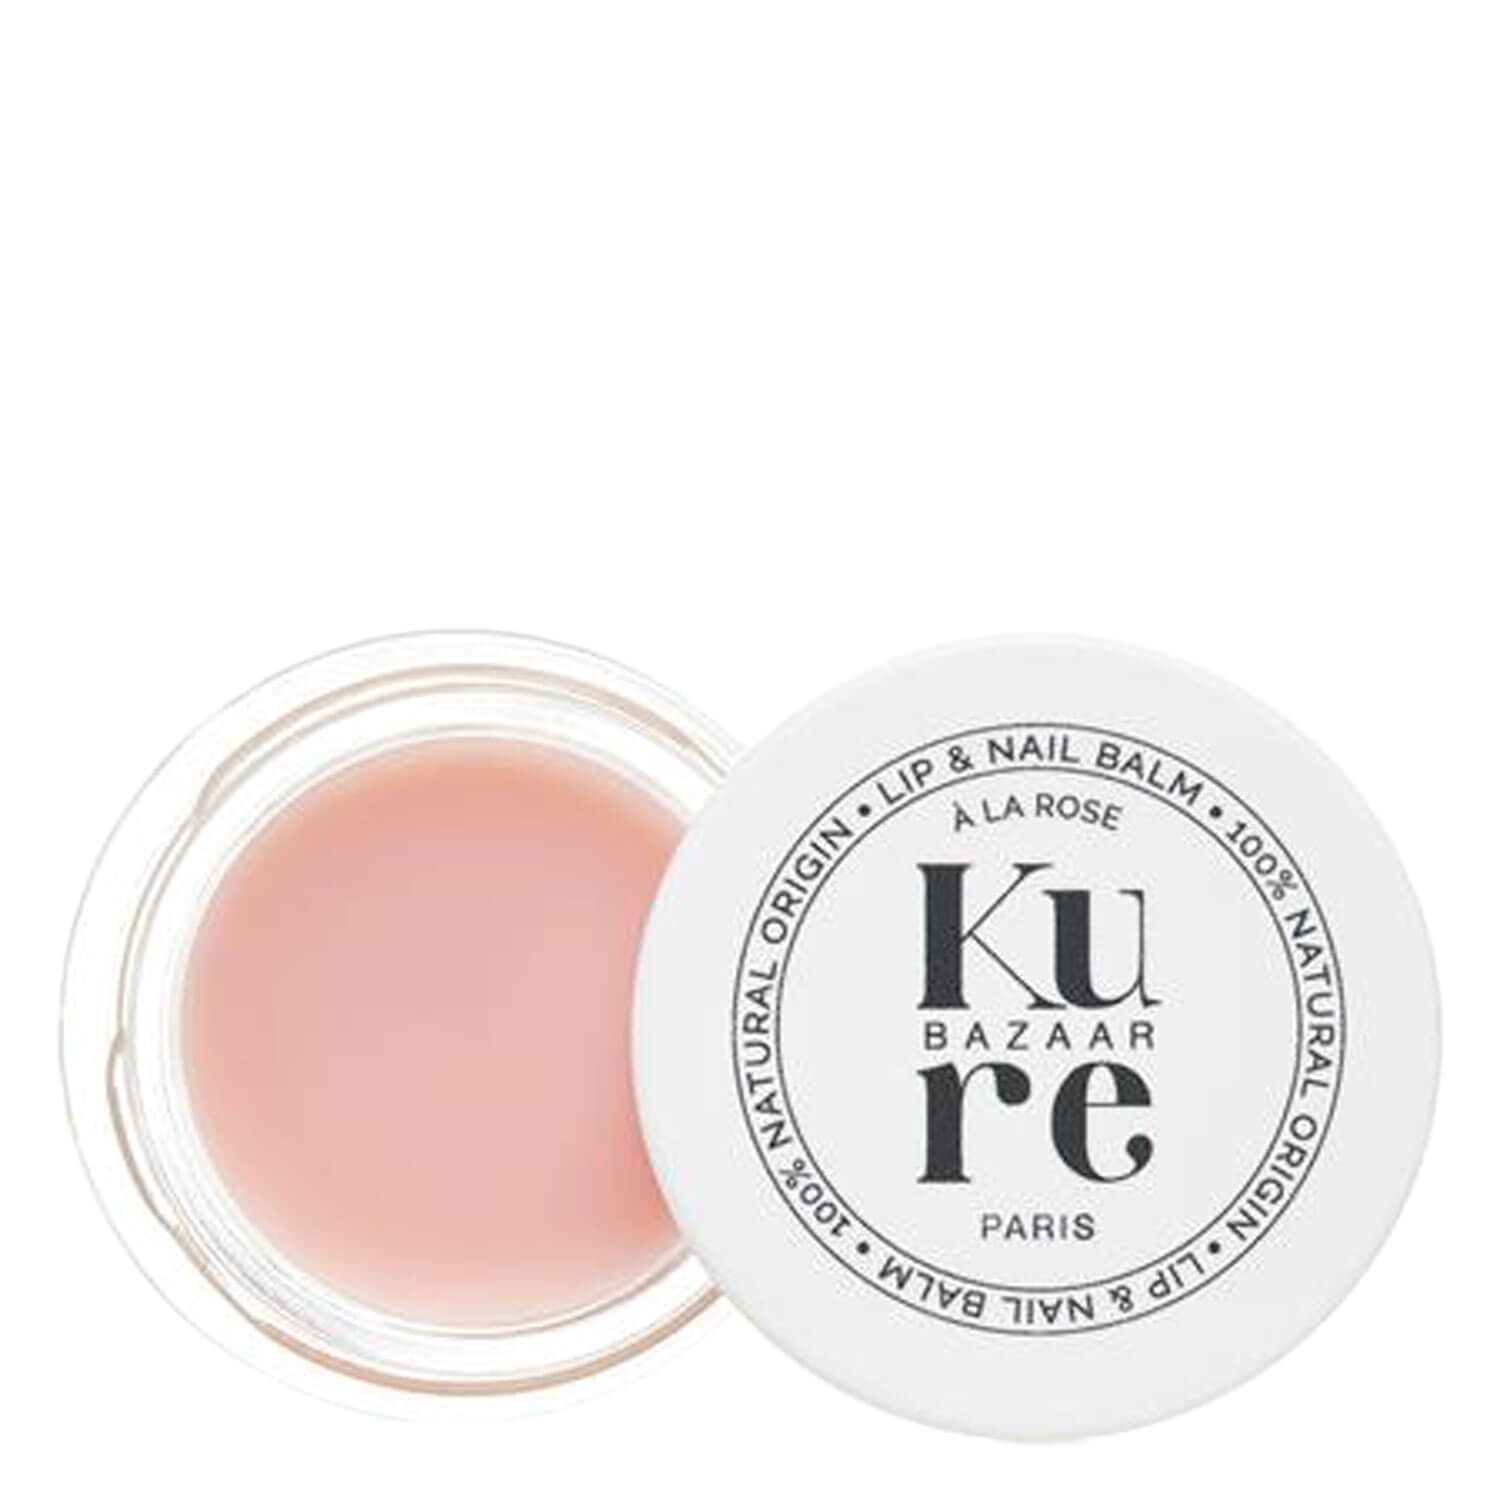 Product image from Kure BAZAAR - Rose Lip & Nail Balm